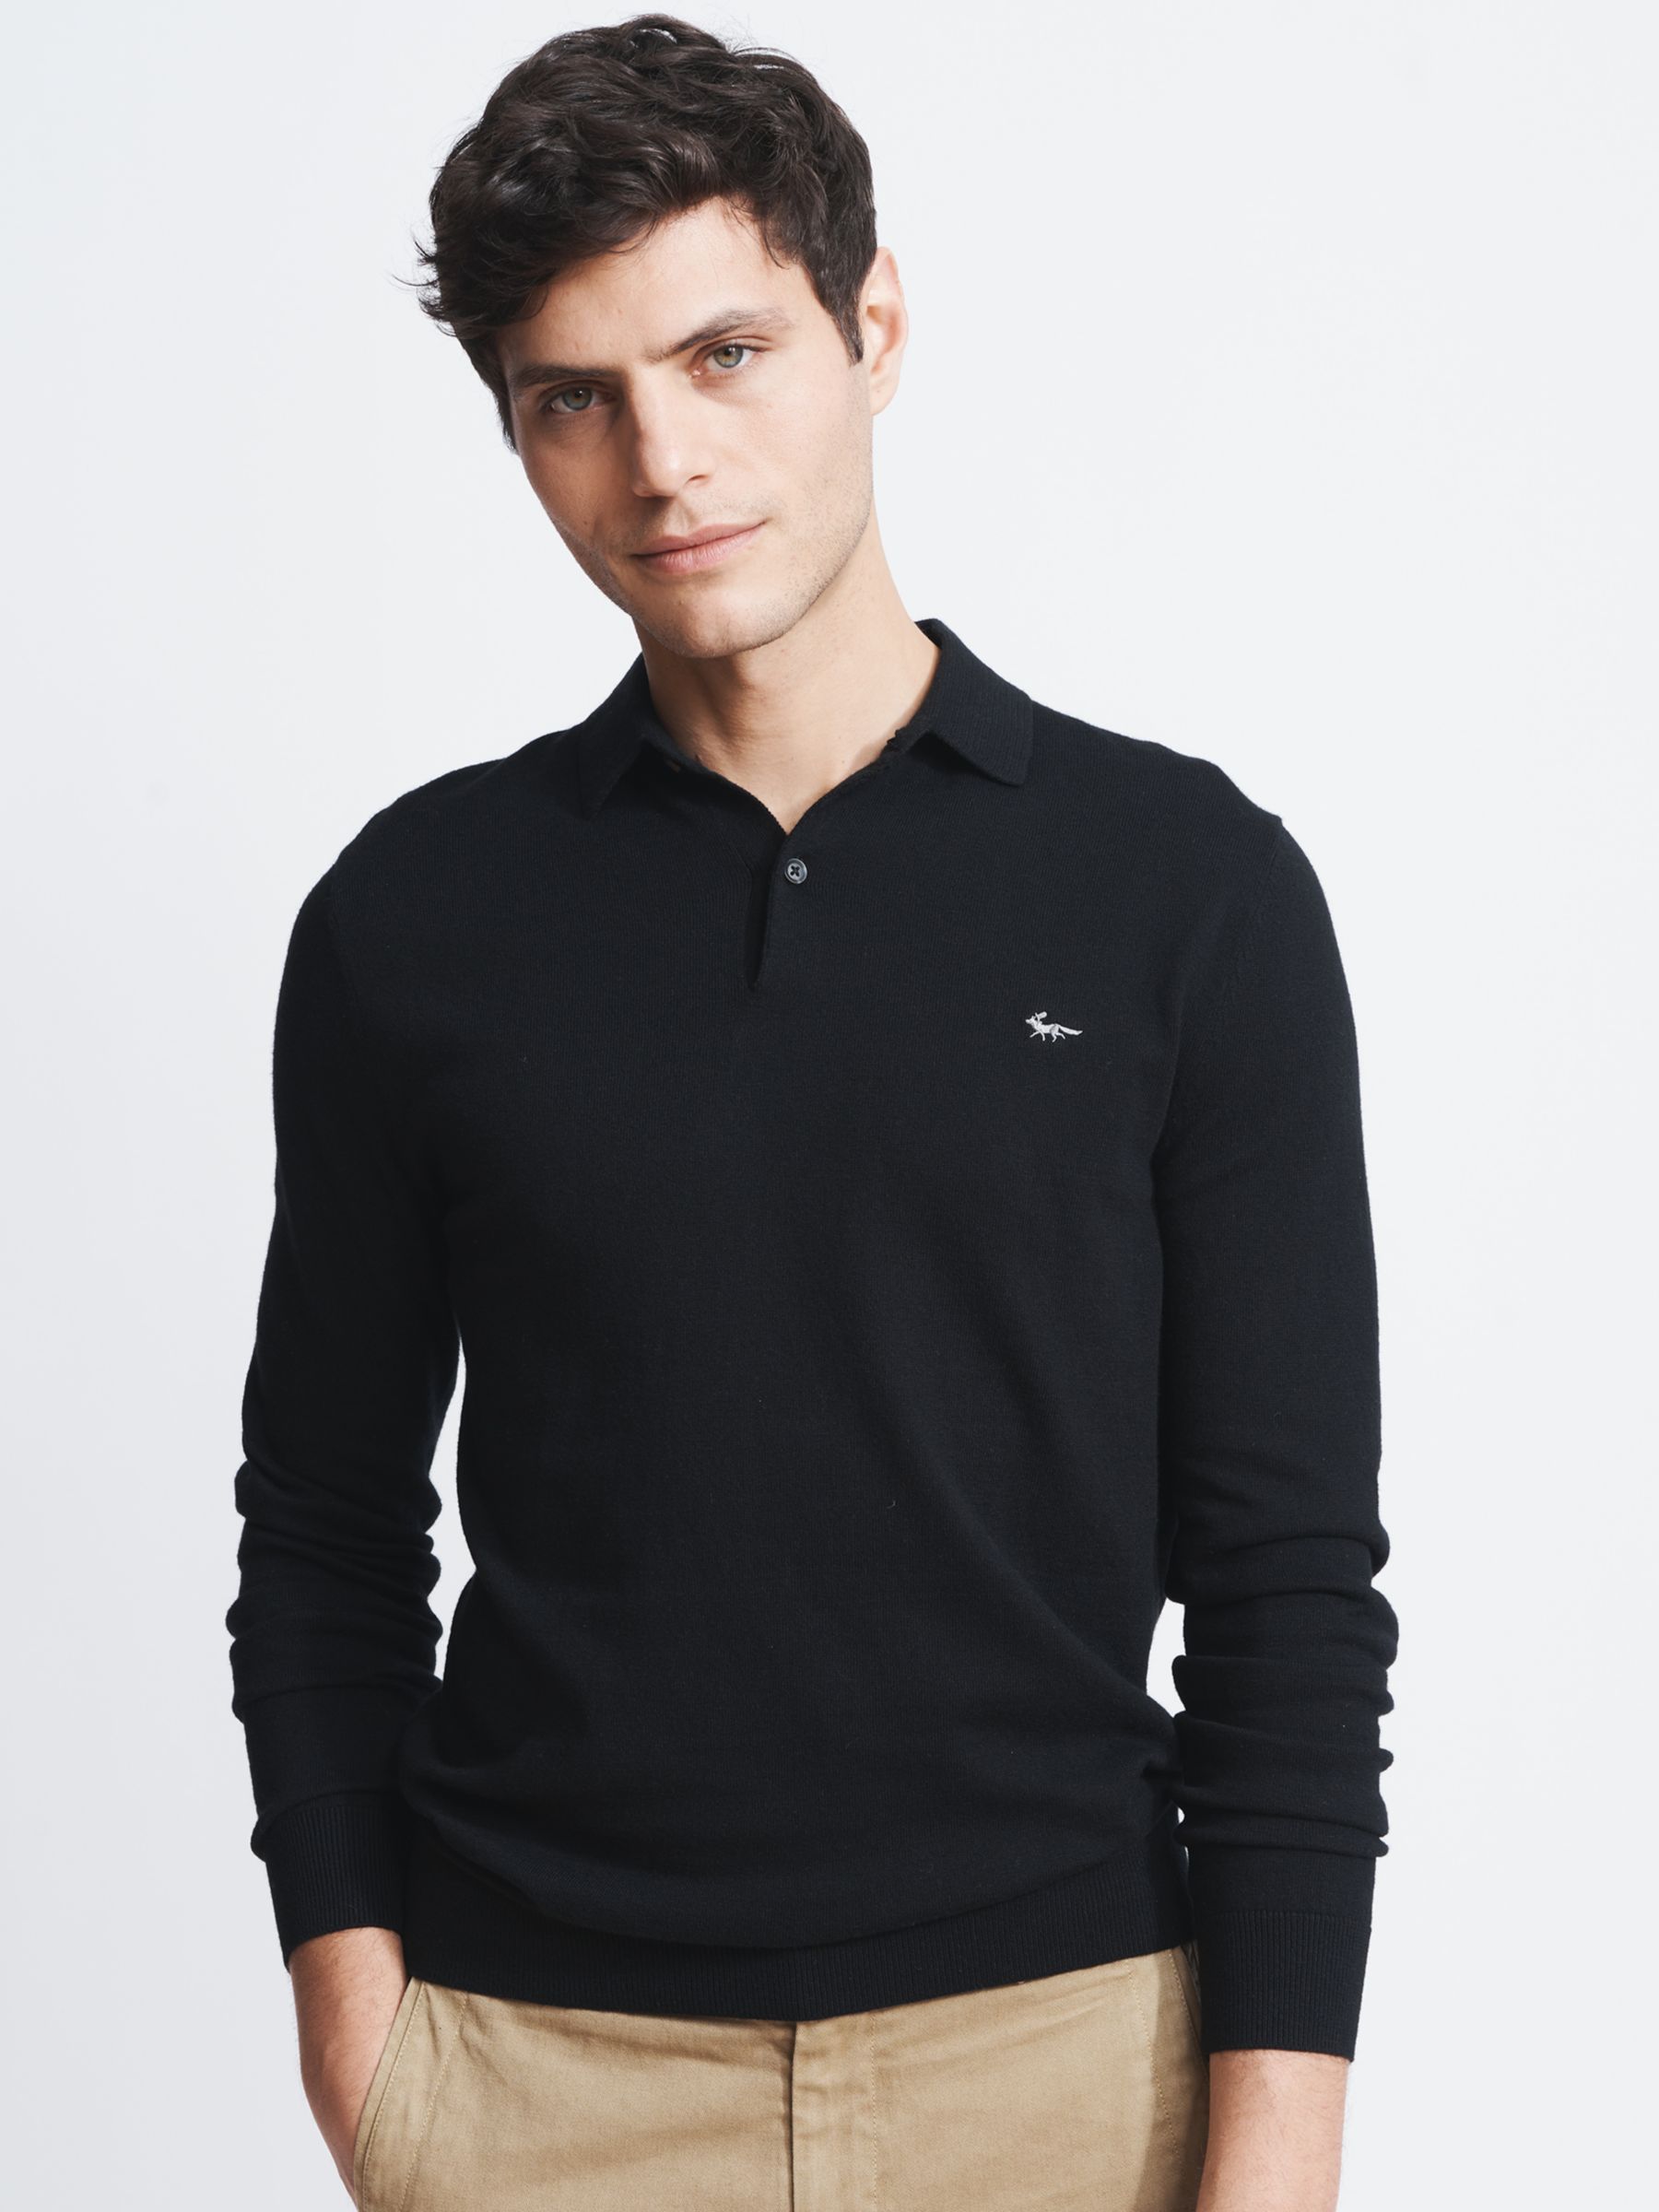 Aubin Thorne Cotton Cashmere Polo Shirt, Black at John Lewis & Partners